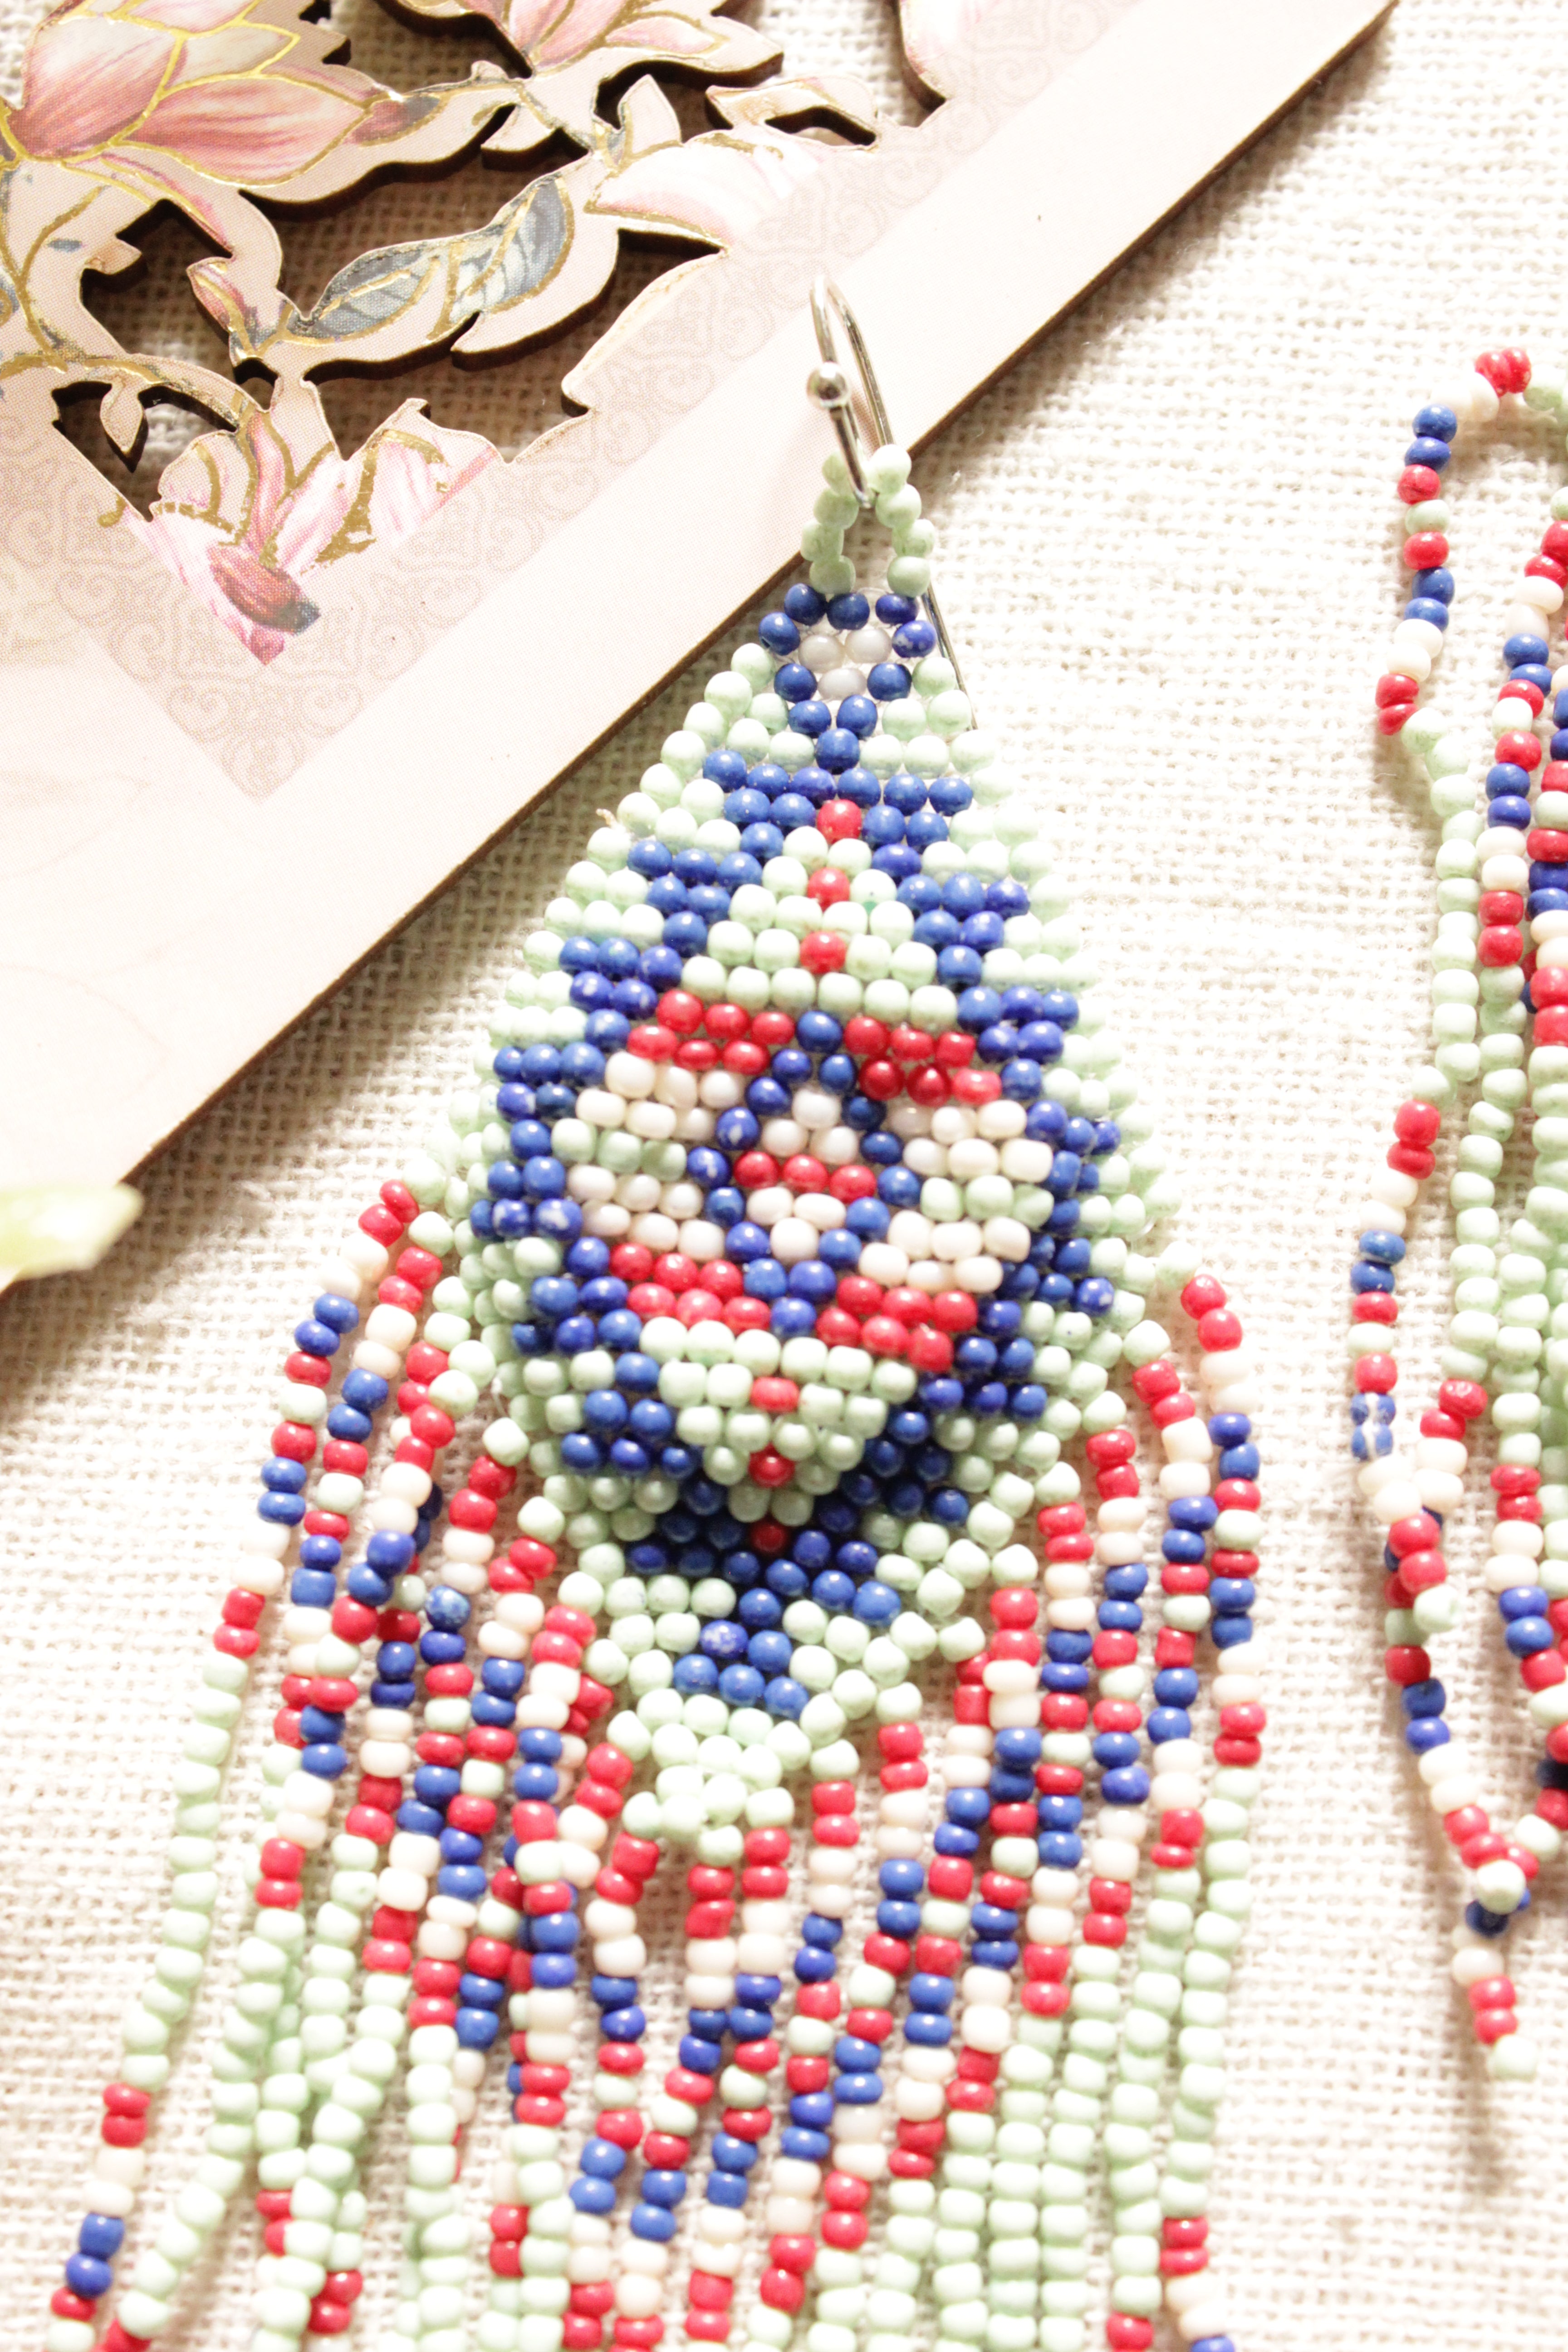 Lime Green,  Red and Blue Beads Hand Braided Dangler Earrings